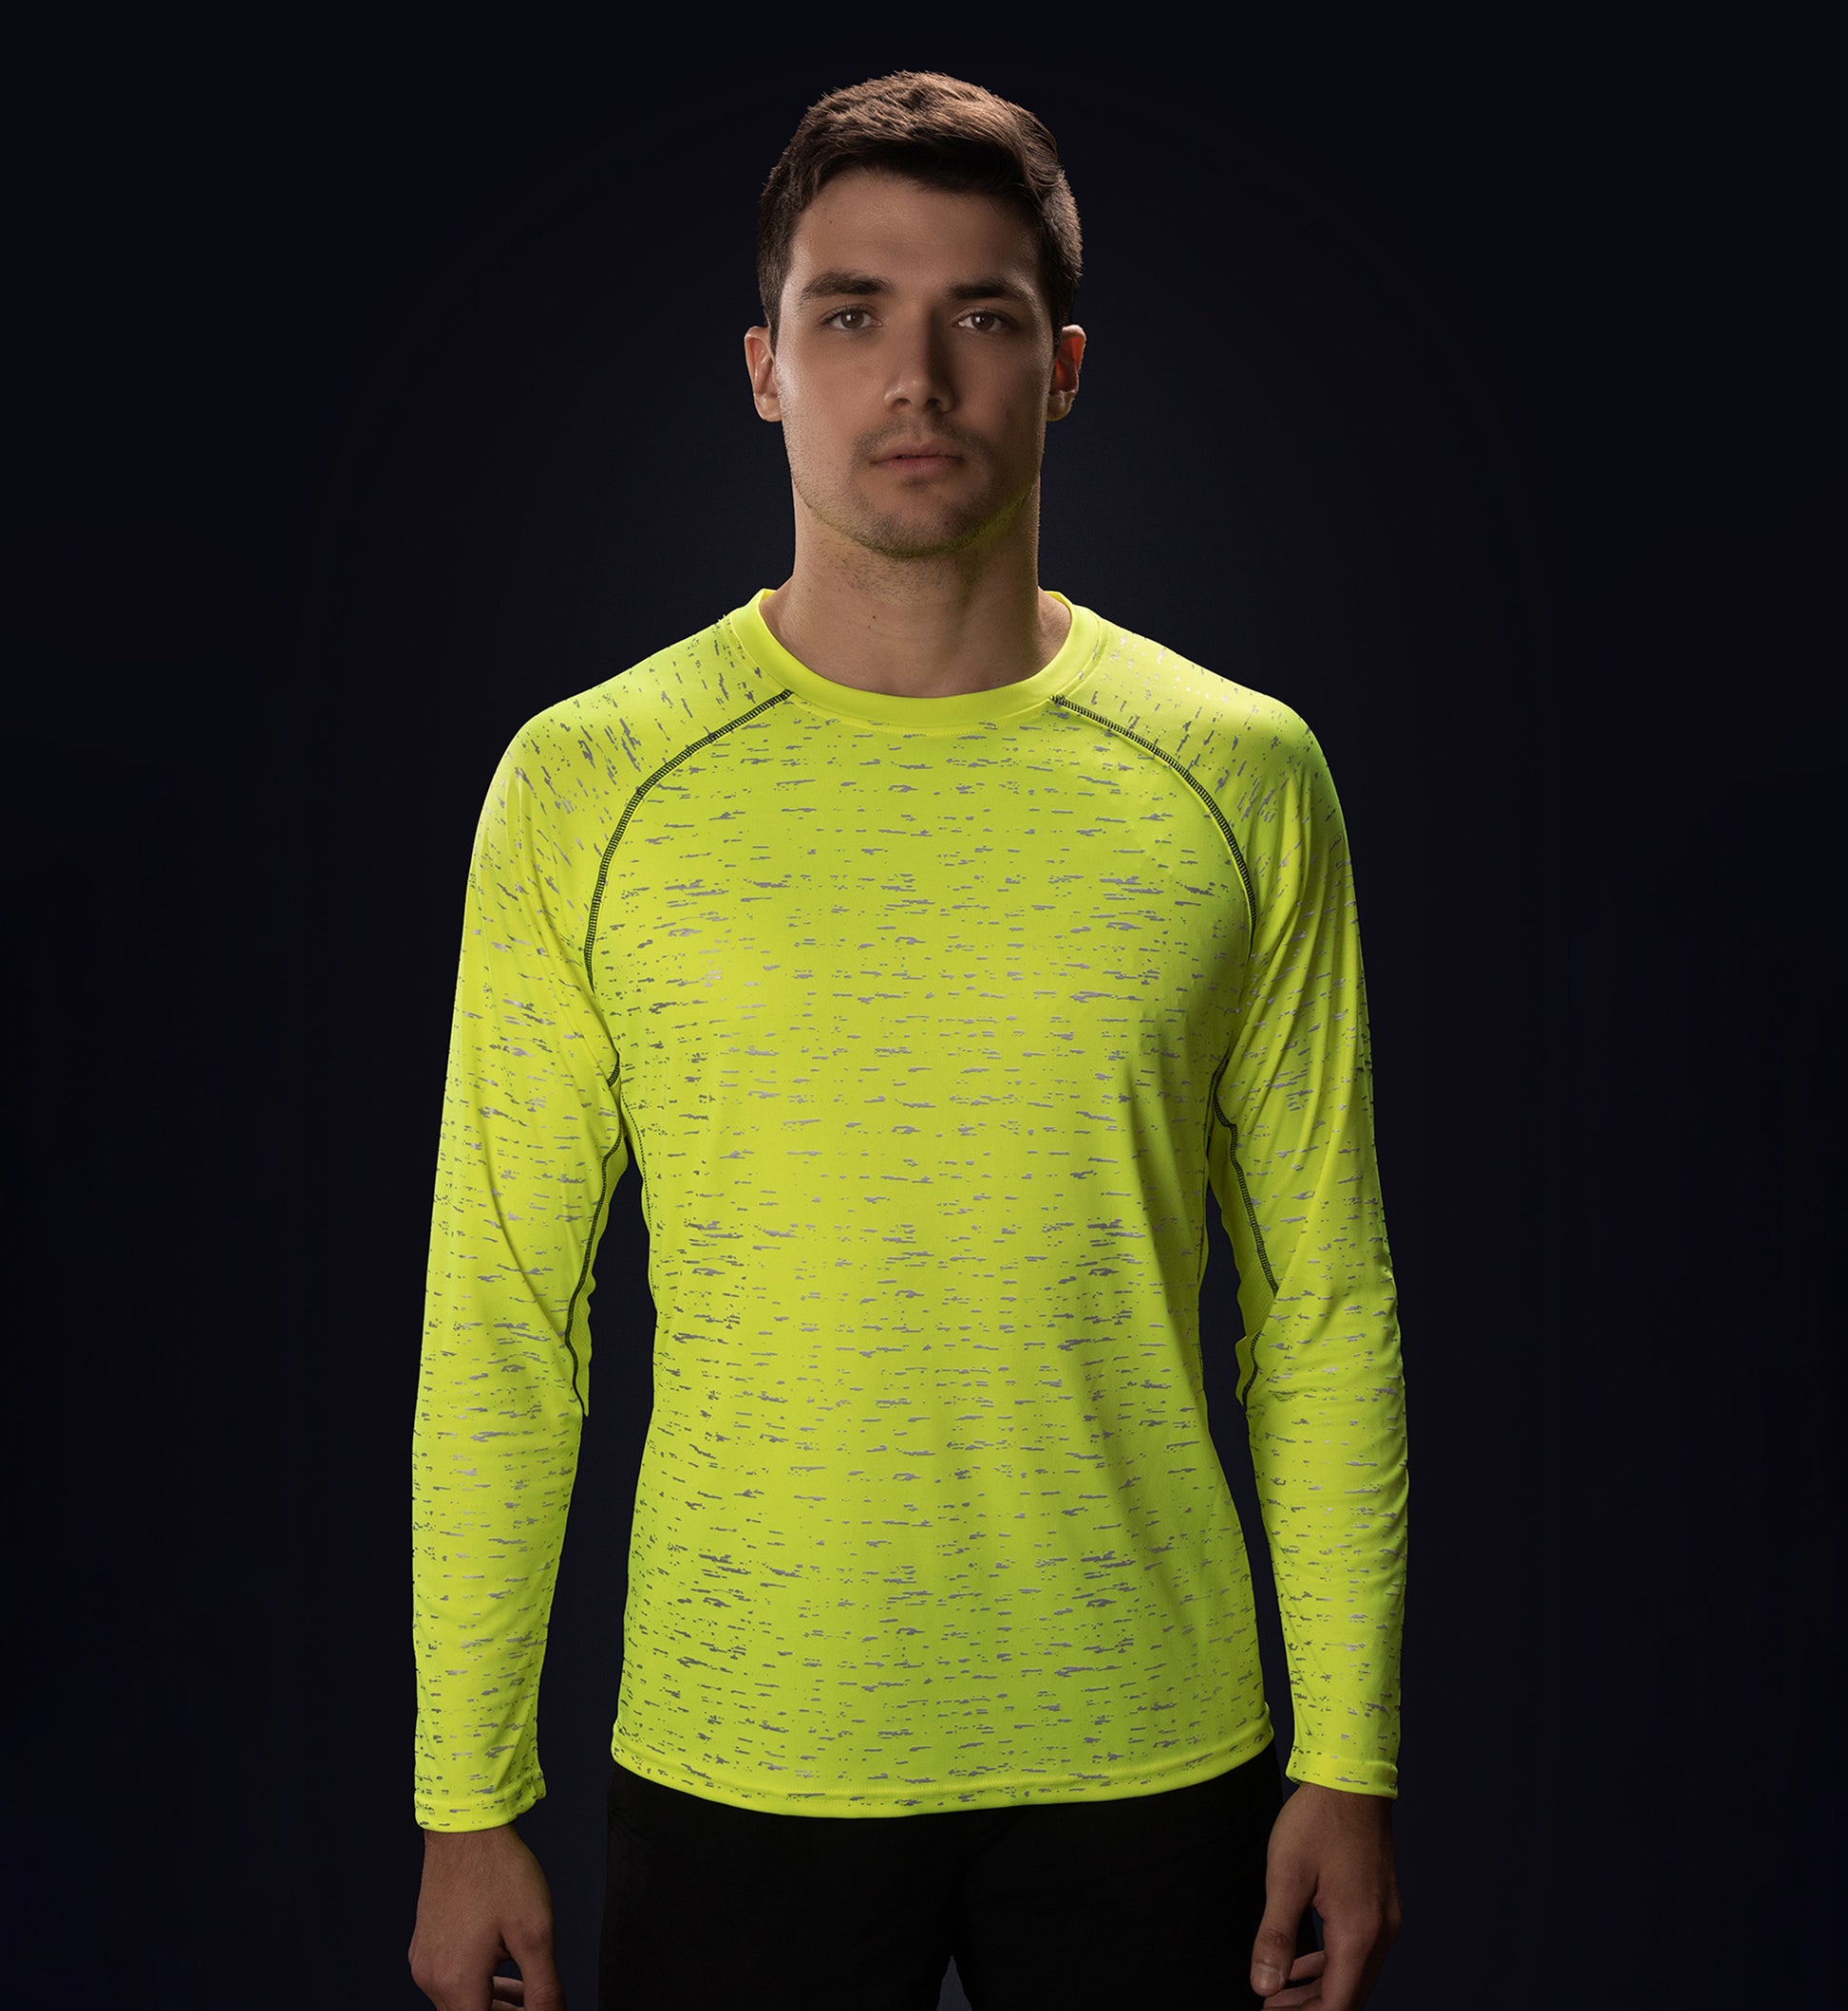 Men's Long Sleeve Reflective Running Shirt - Lime SM